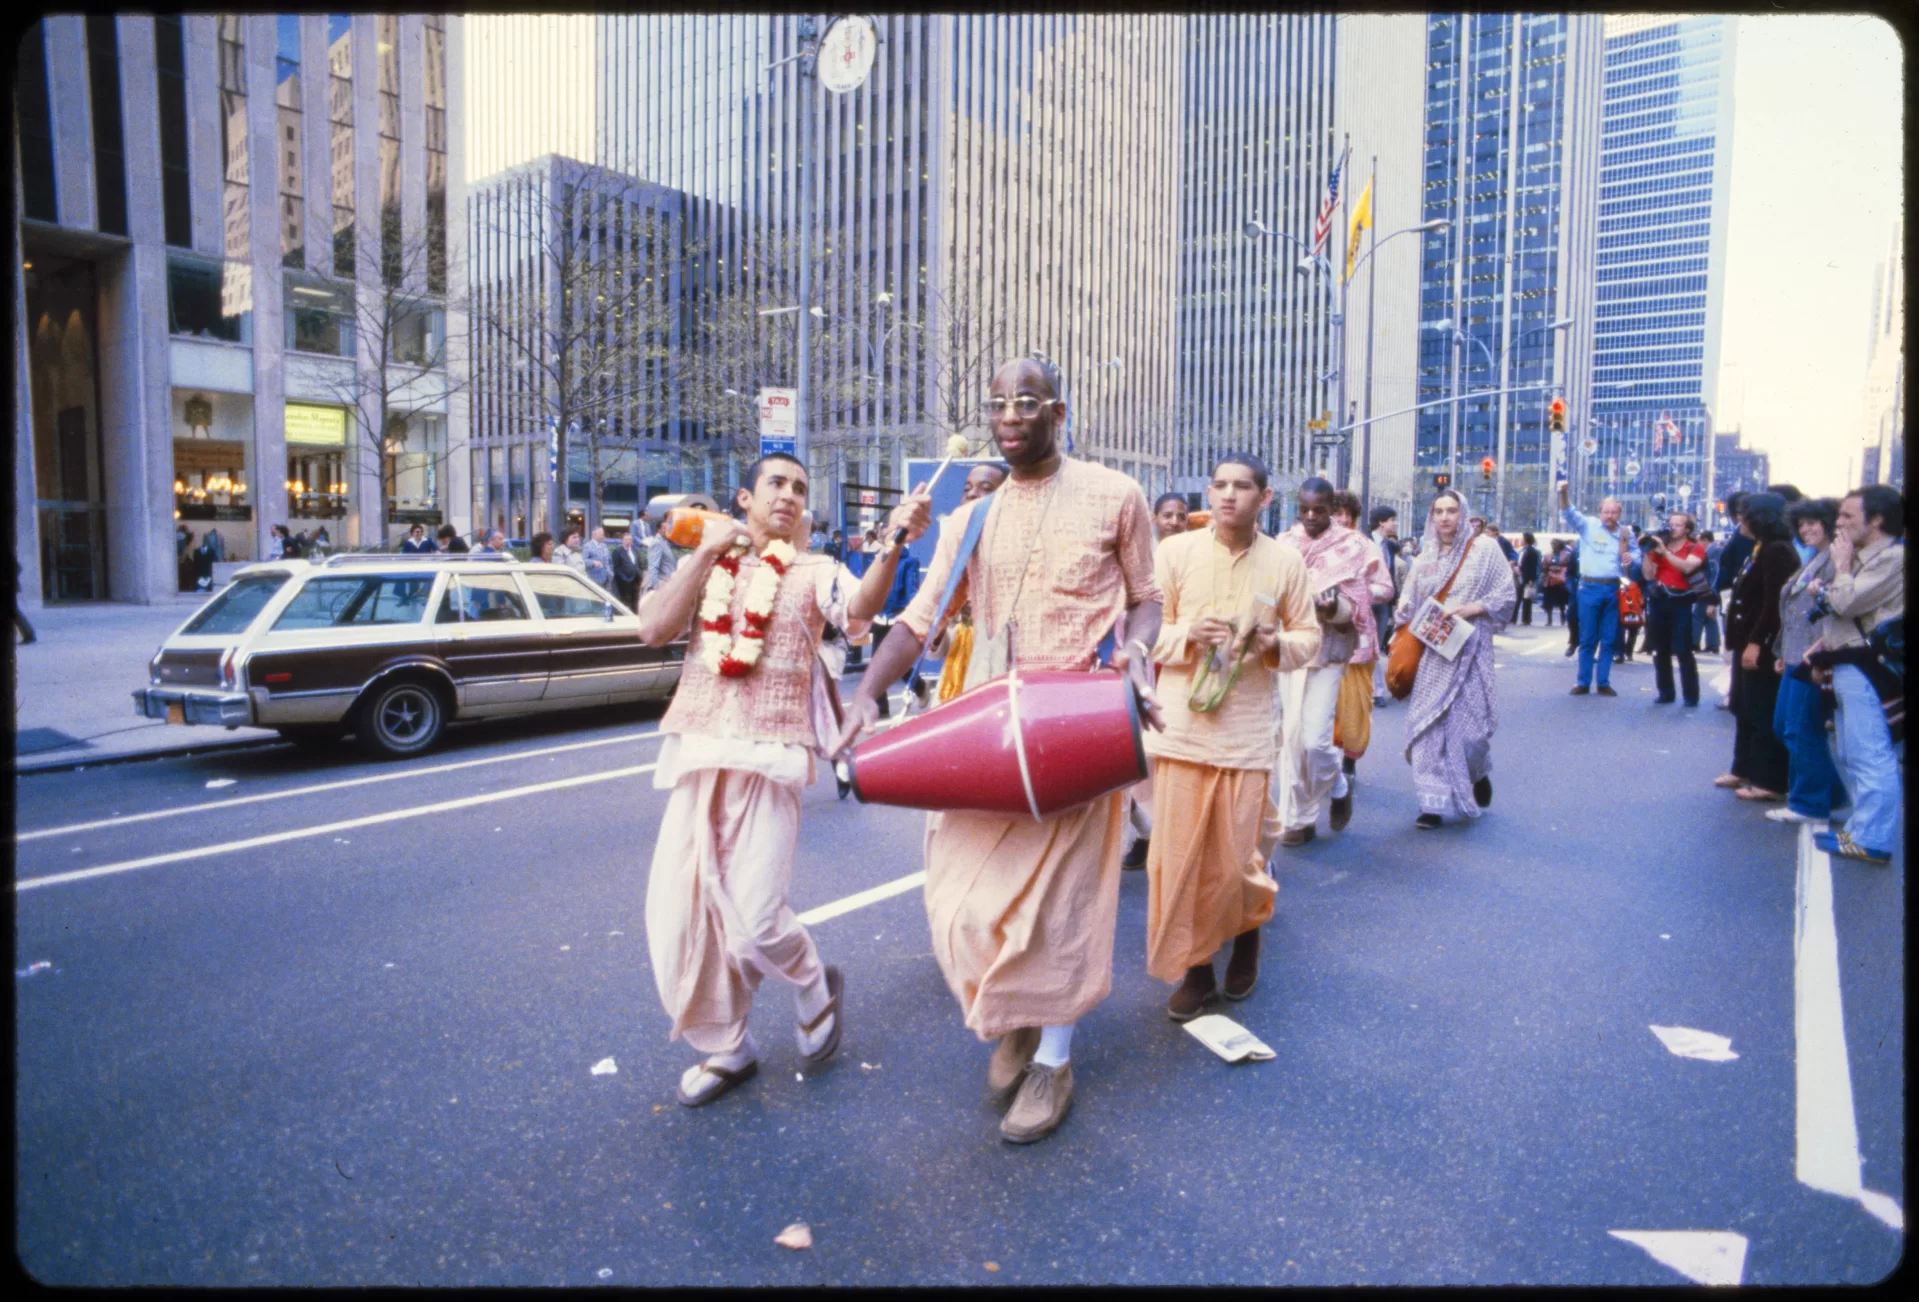 Hare Krishnas march in New York City, circa 1975.
. (Bernard Gotfryd/Library of Congress, Bernard Gotfryd photograph collection Library of Congress Prints and Photographs Division https://www.loc.gov/item/2020736593/)